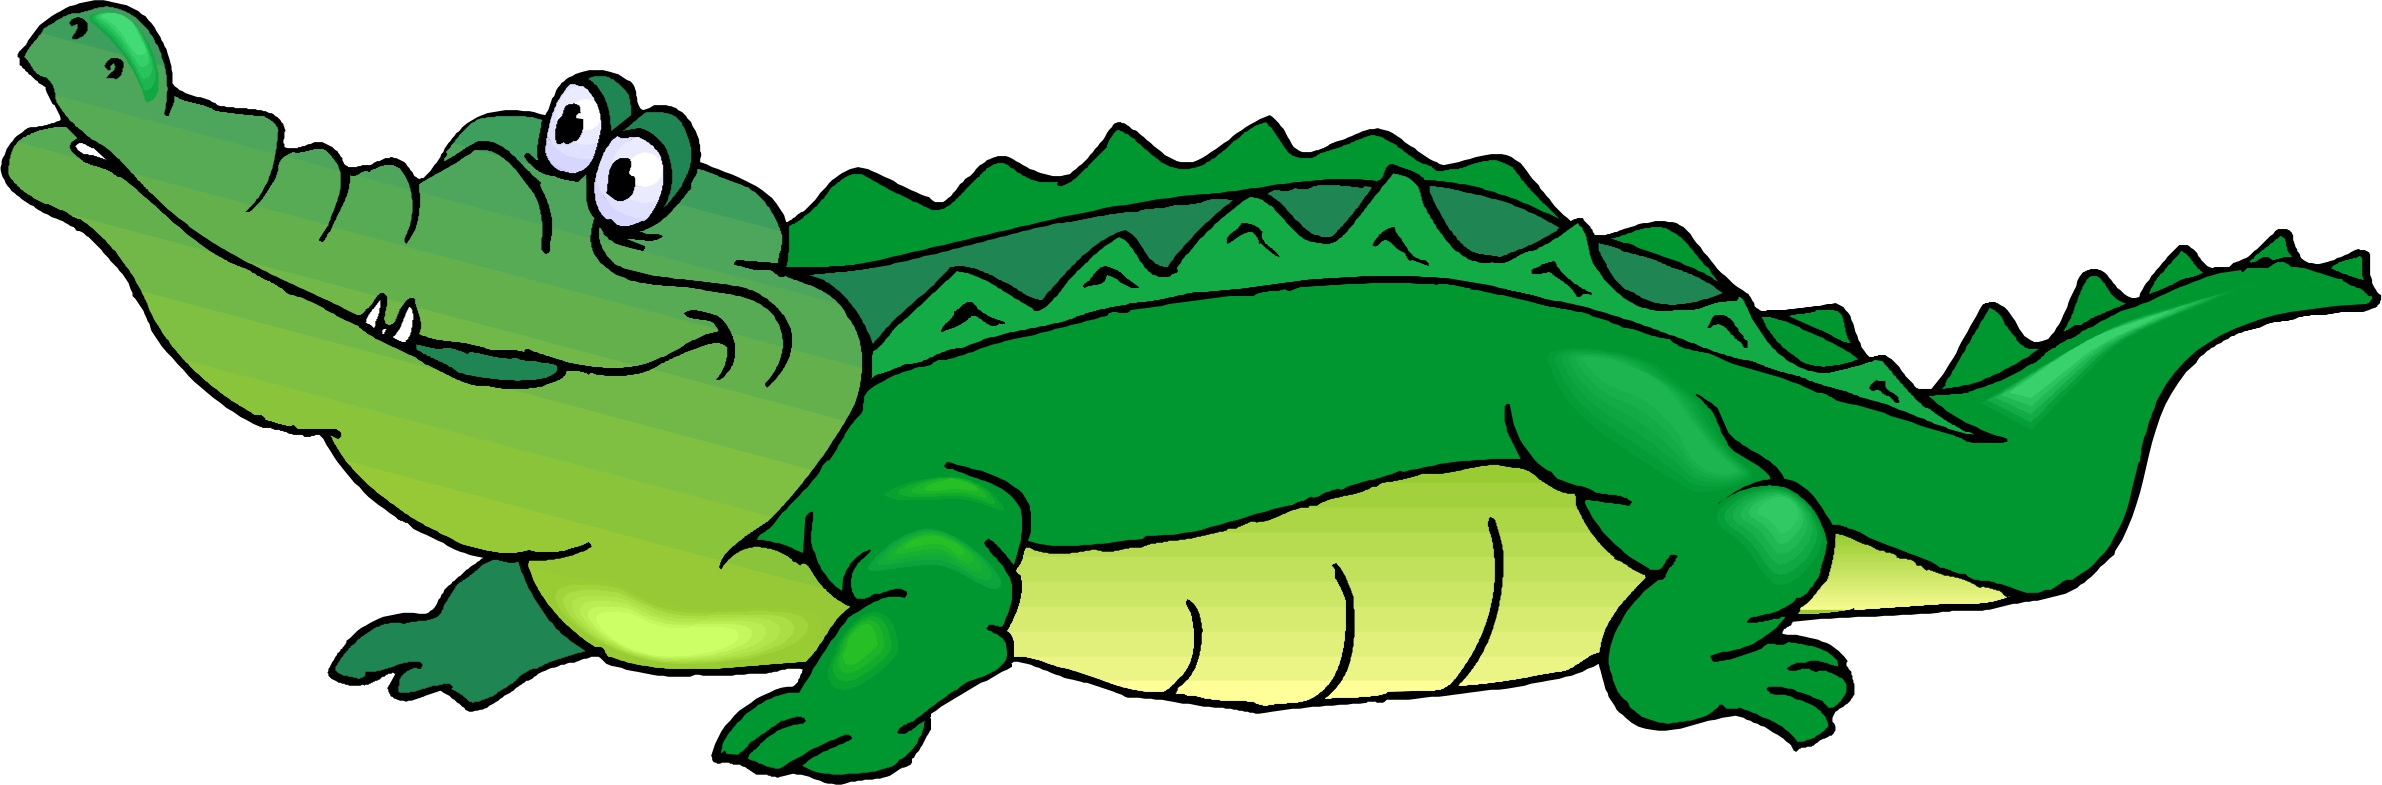 Swamp alligator cartoon .